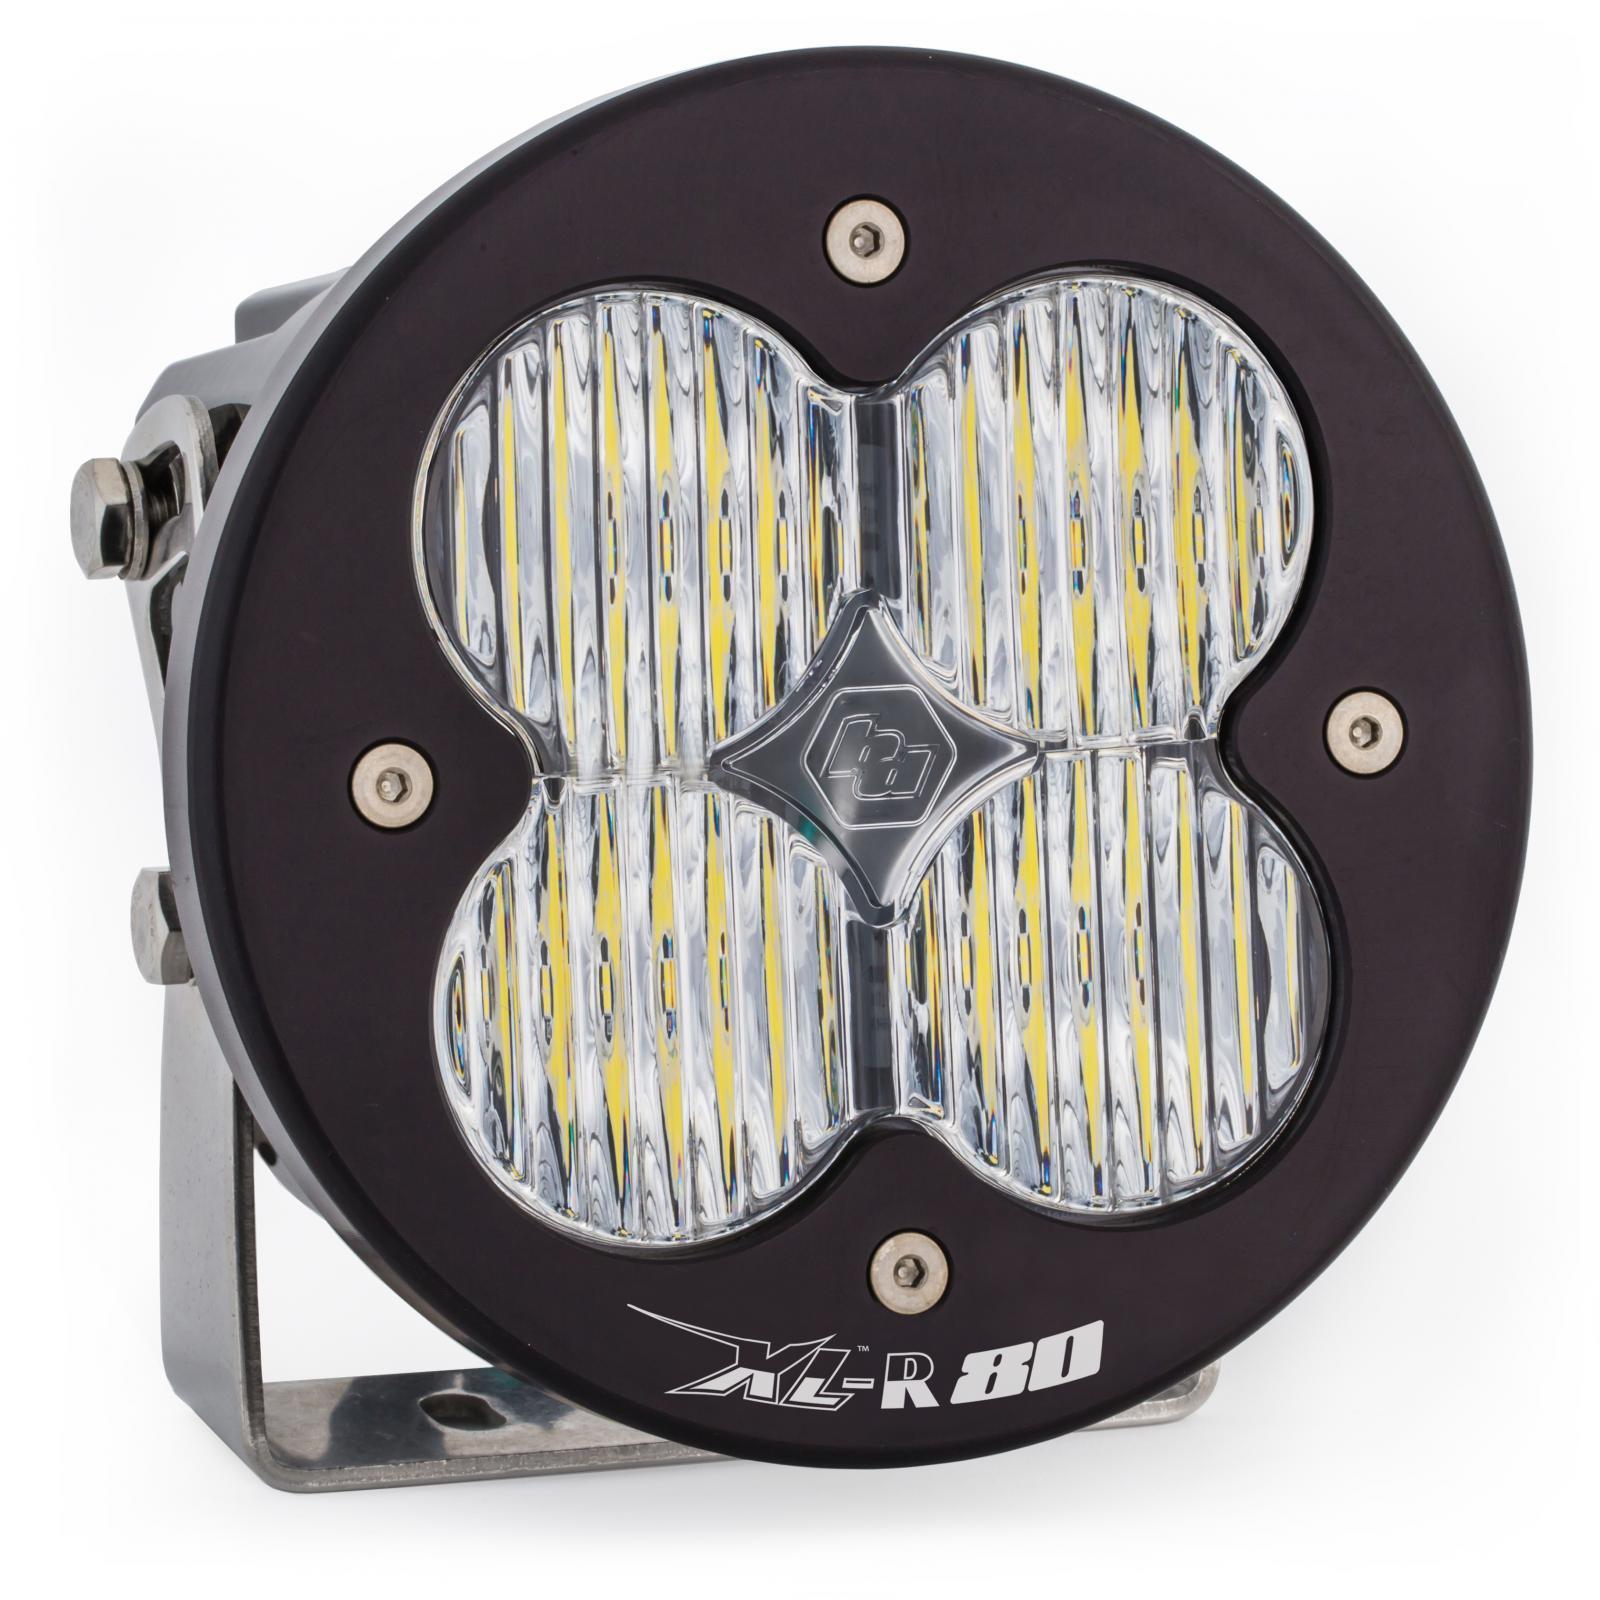 XL 80-R LED Light Lighting Baja Designs Clear Wide Cornering 